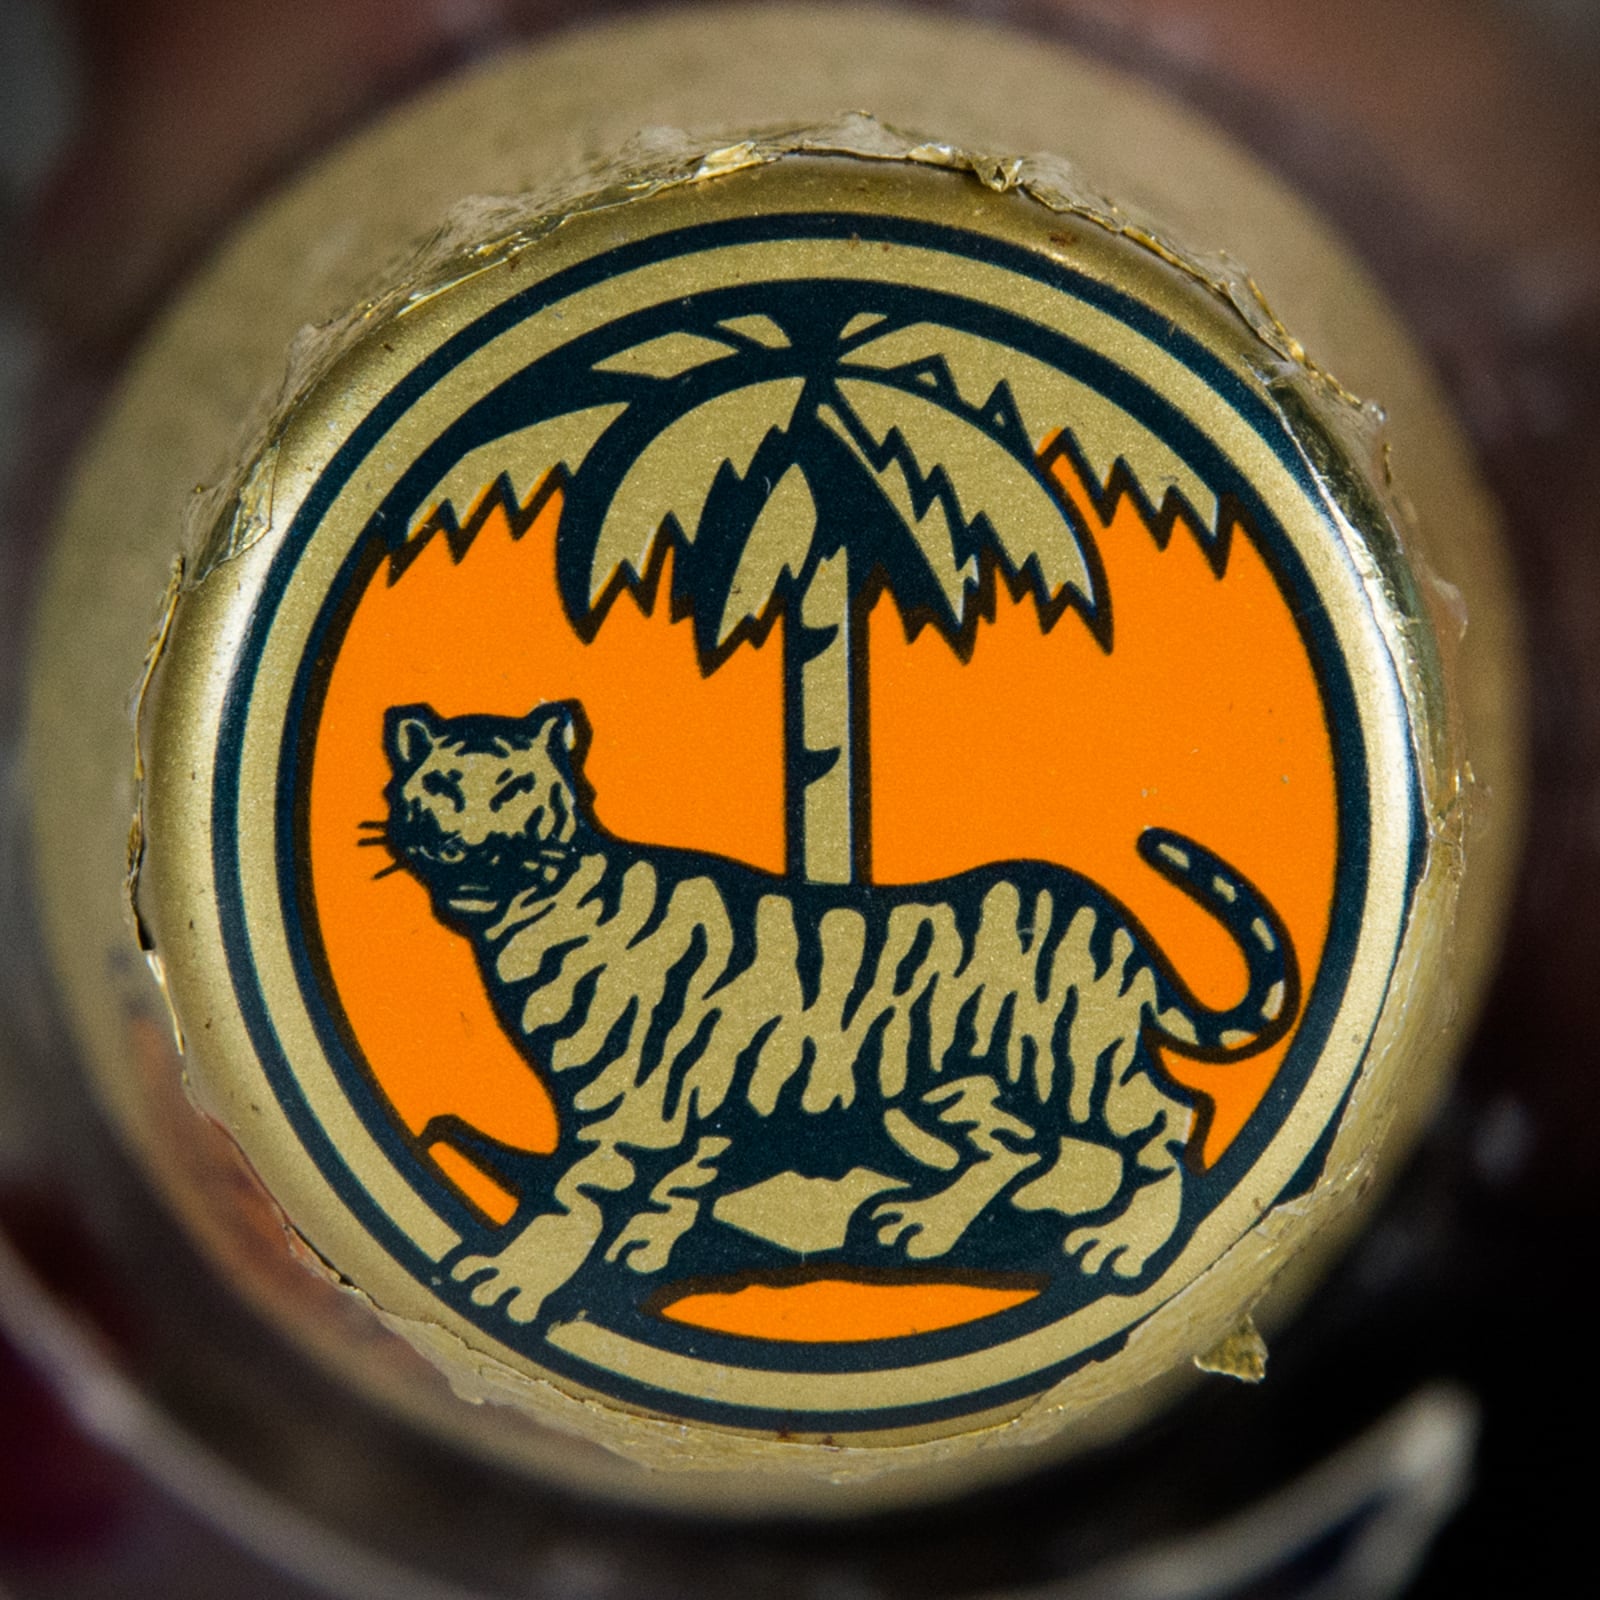 Tiger "100,000,000 Litres" Commemorative Limited Edition Beer Bottle